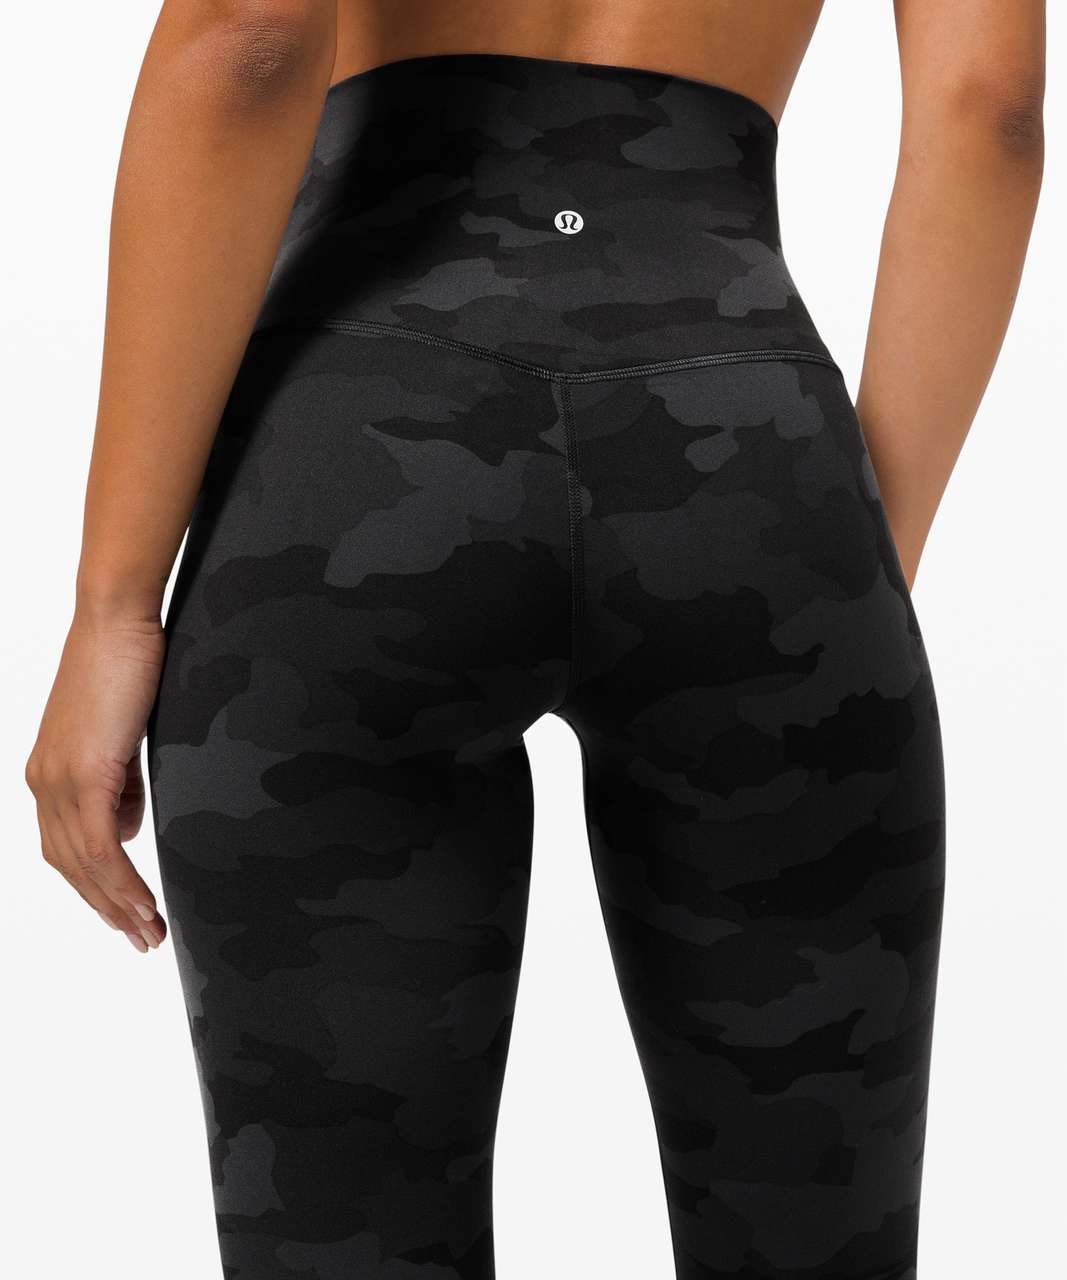 Lululemon Yoga Align Camo Leggings Black Size 4 - $65 (33% Off Retail) -  From Cauley